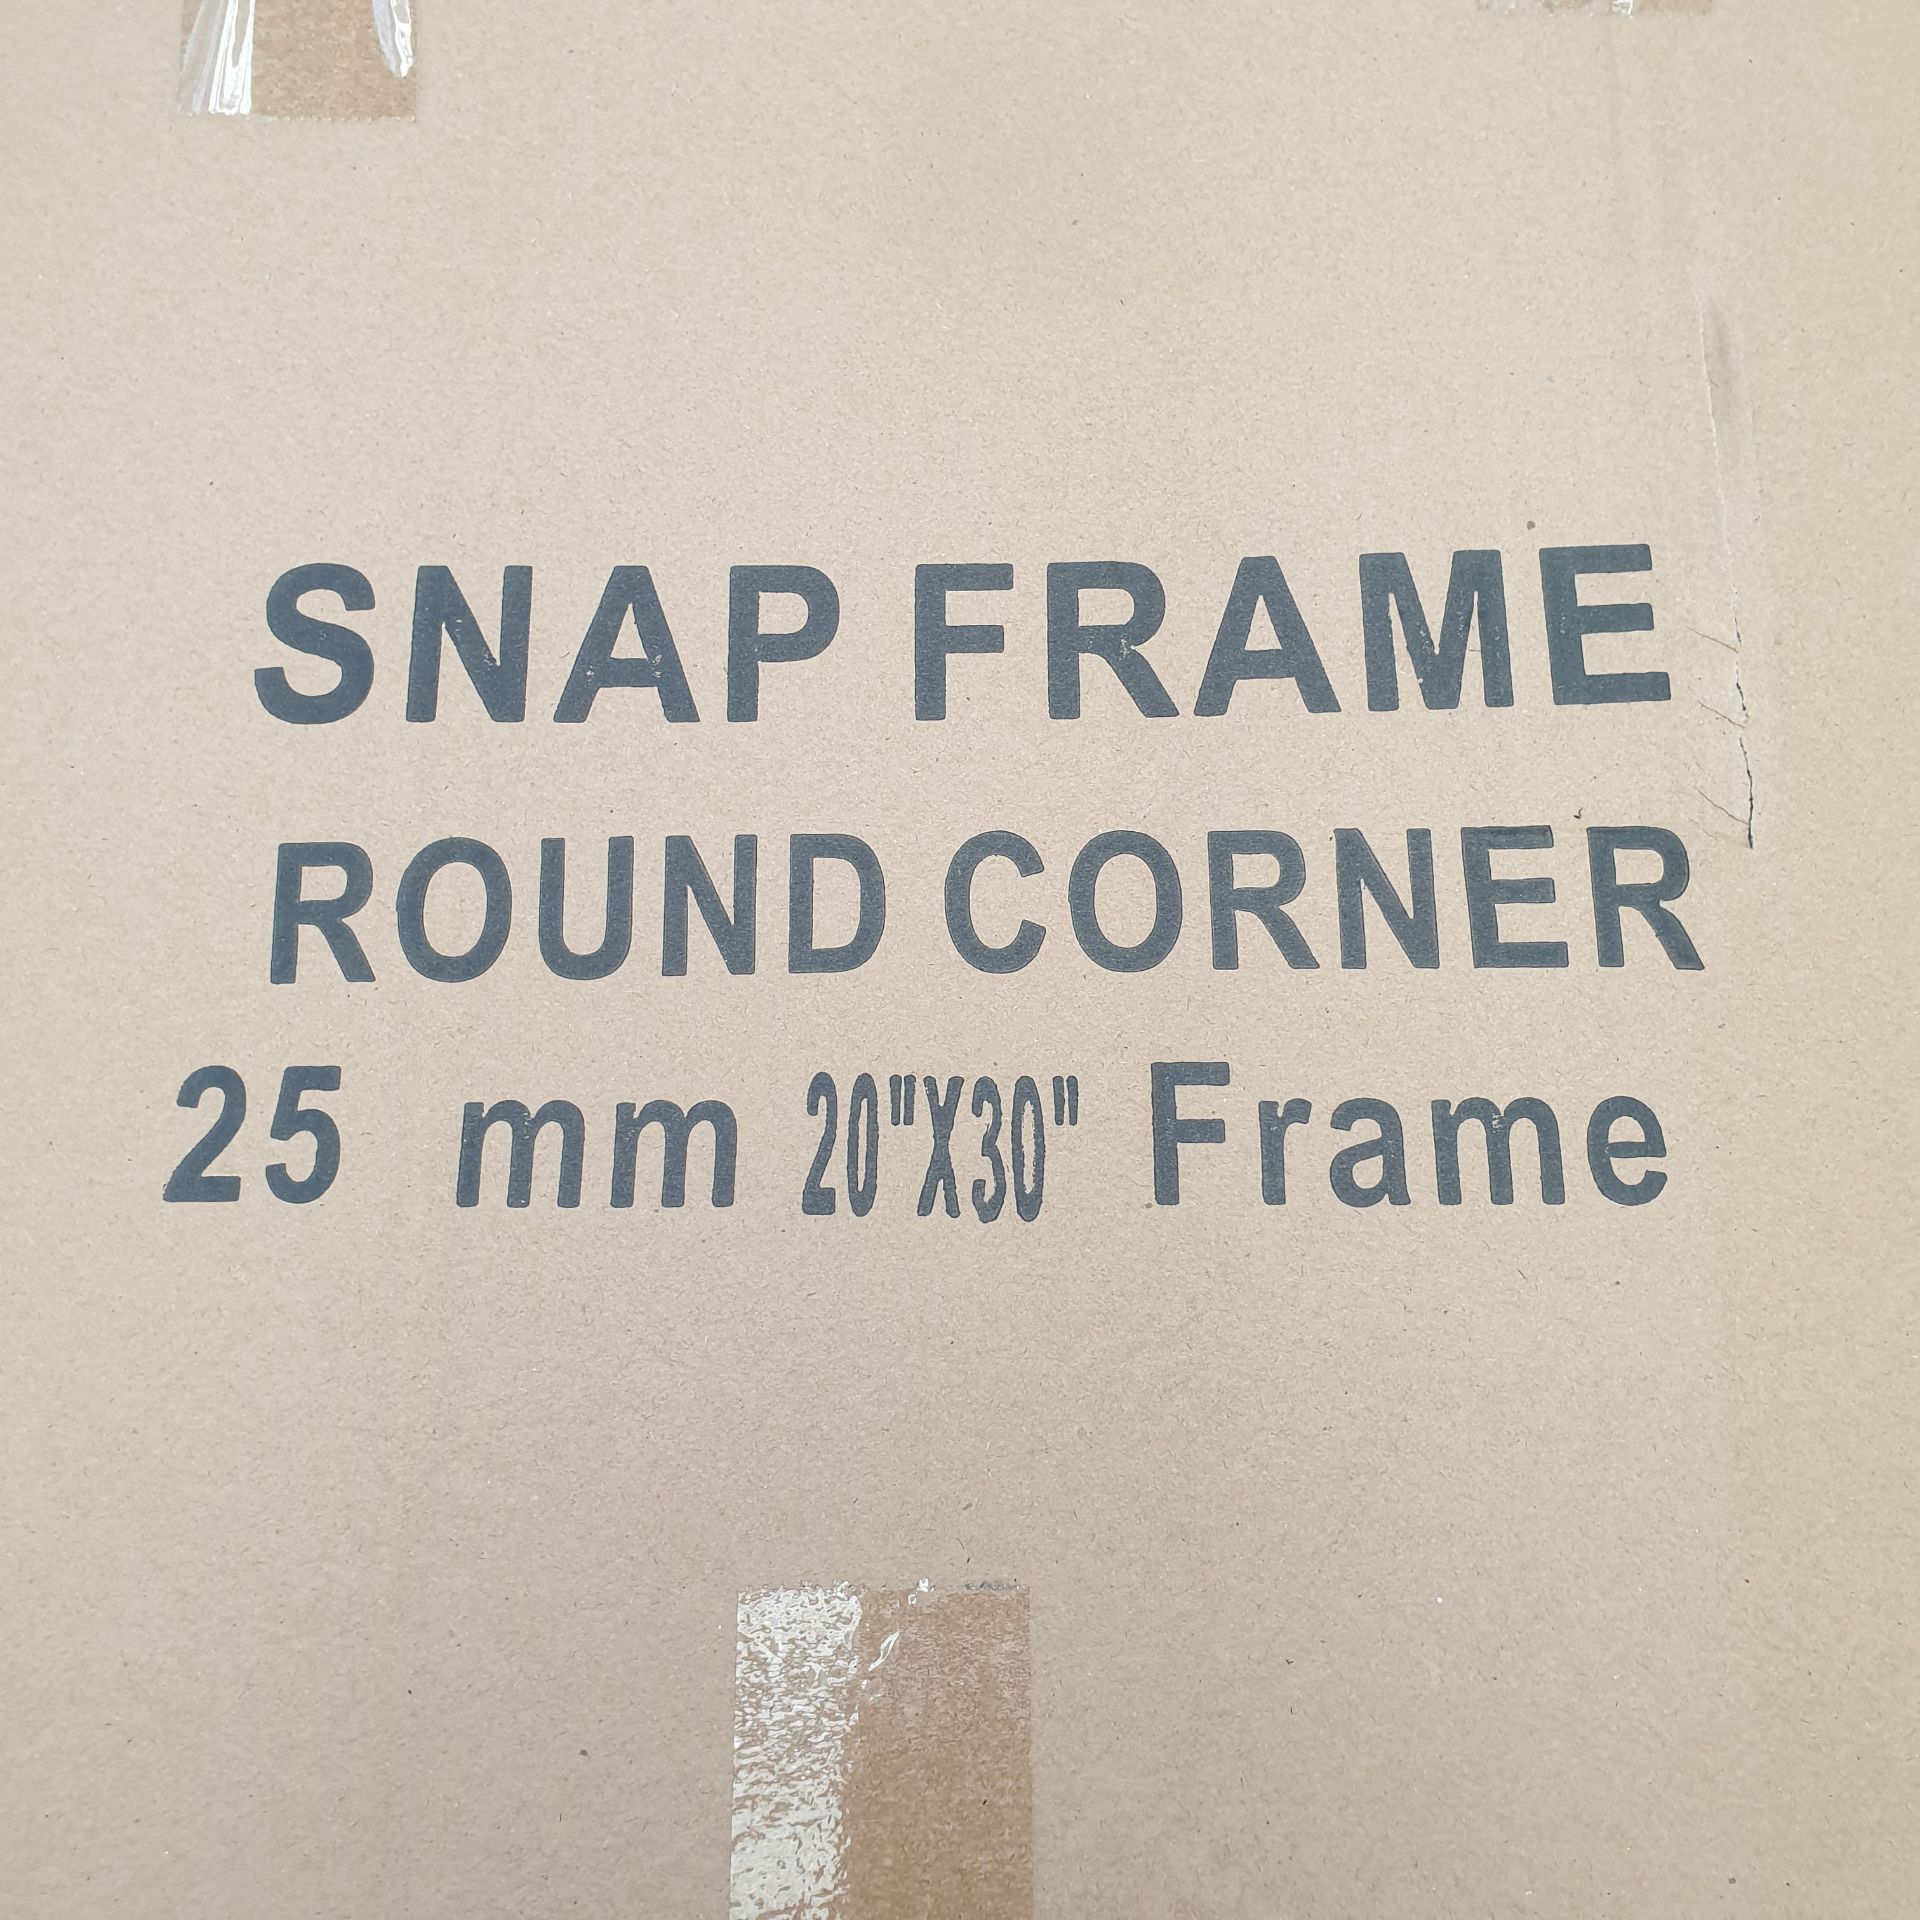 80 x Snap Frame Round Corner 25mm 20" x 30" Frame - Image 3 of 8